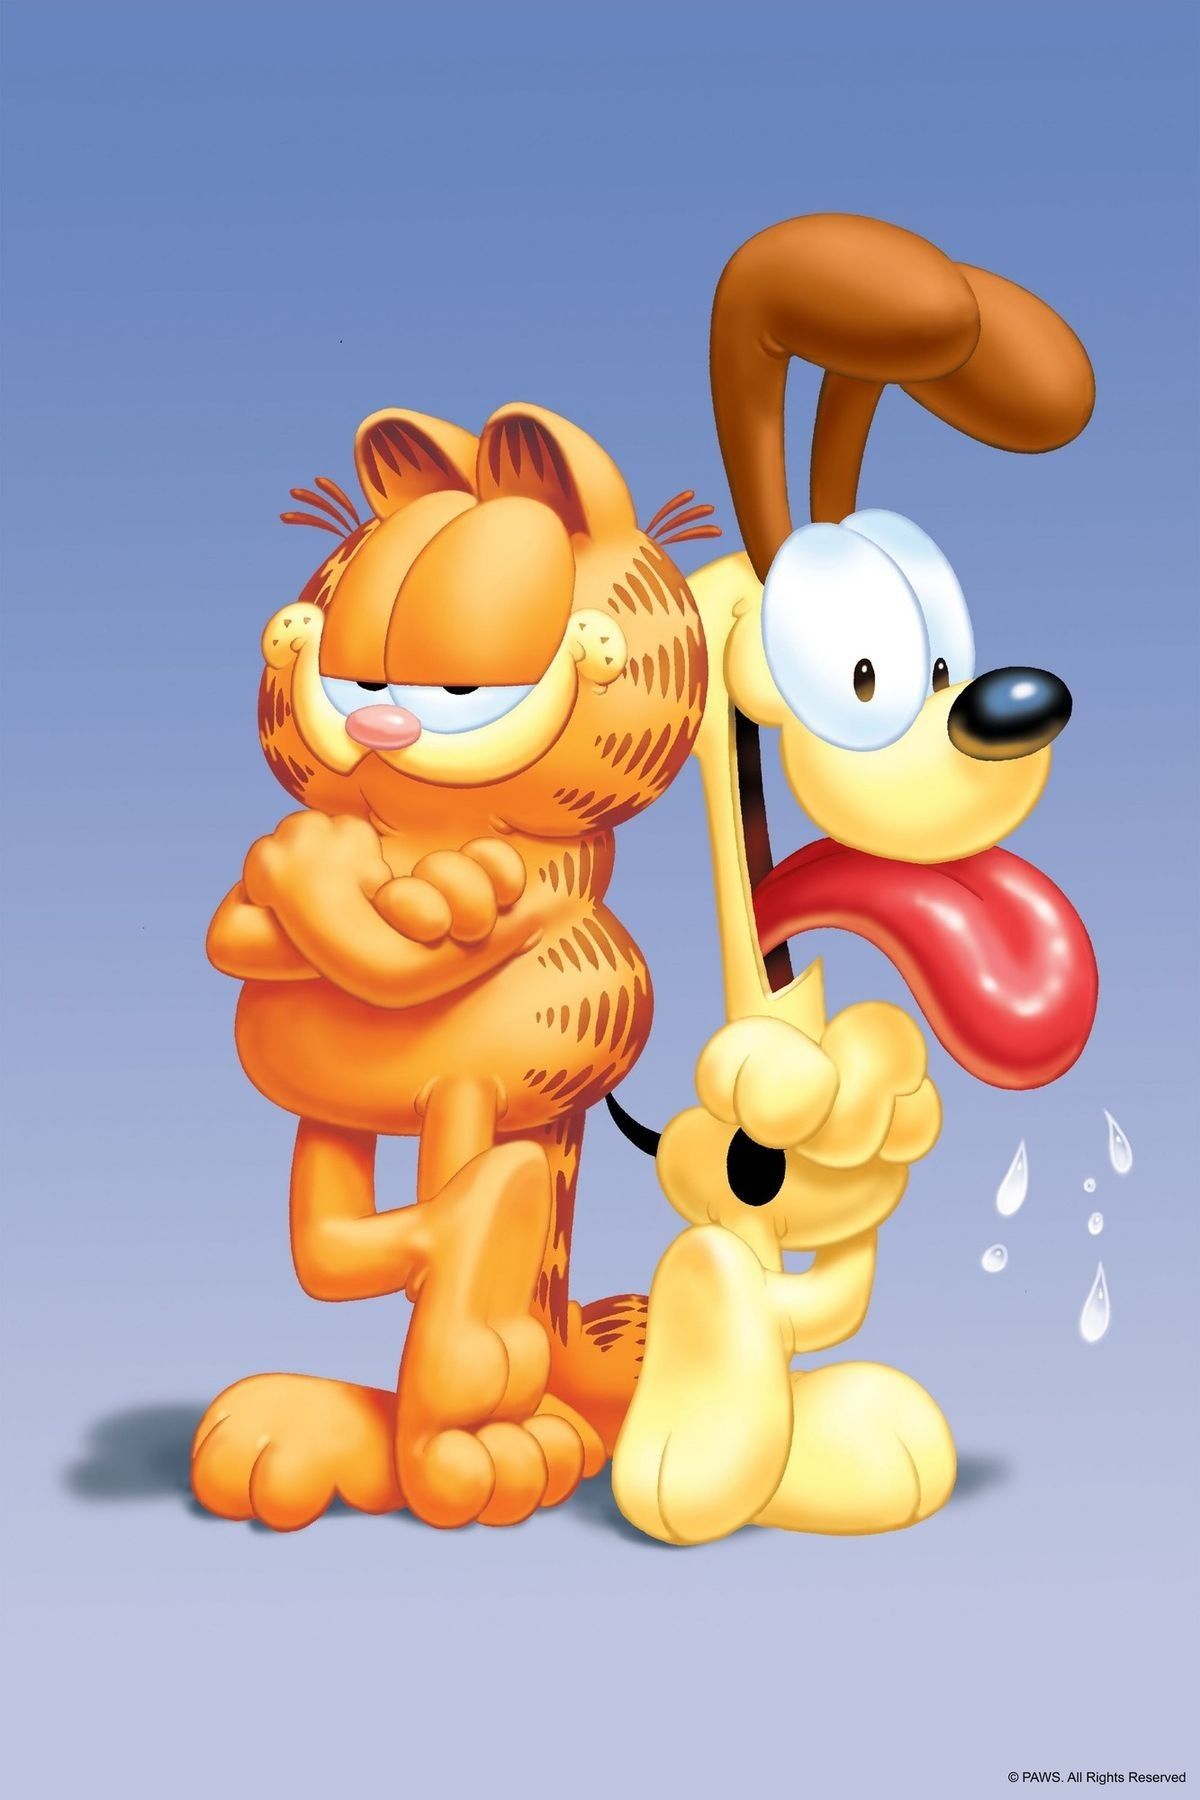 Garfield odie. Garfield and odie, Garfield wallpaper, Garfield picture